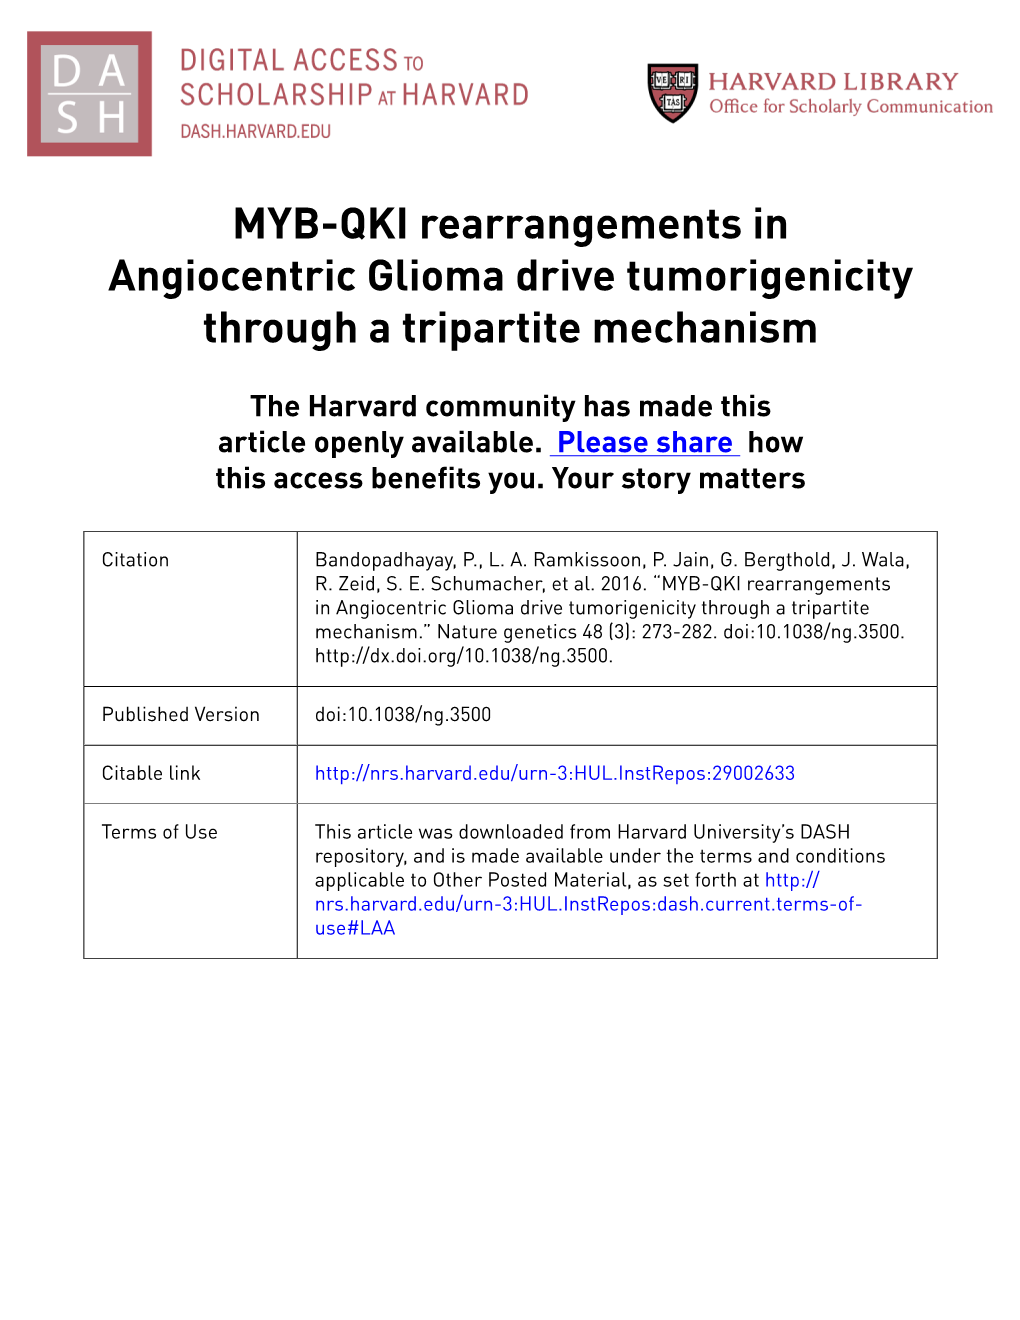 MYB-QKI Rearrangements in Angiocentric Glioma Drive Tumorigenicity Through a Tripartite Mechanism